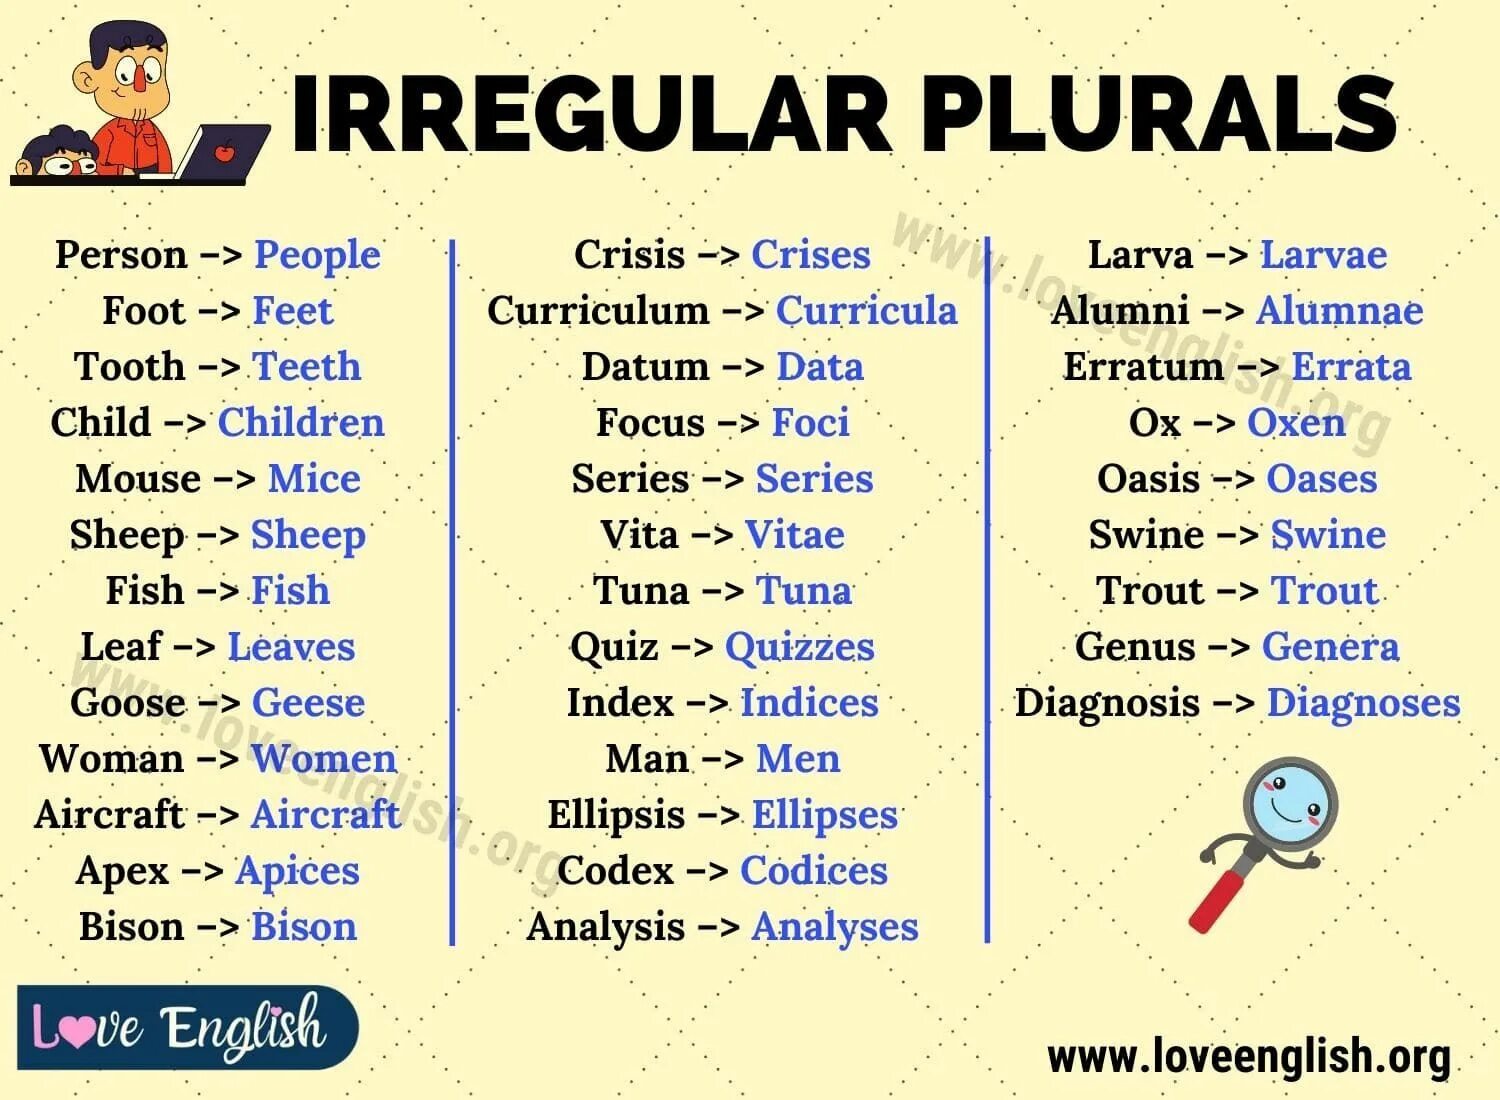 Plural Nouns in English. Irregular plurals список. Irregular plurals таблица. Singular and plural Nouns исключения.